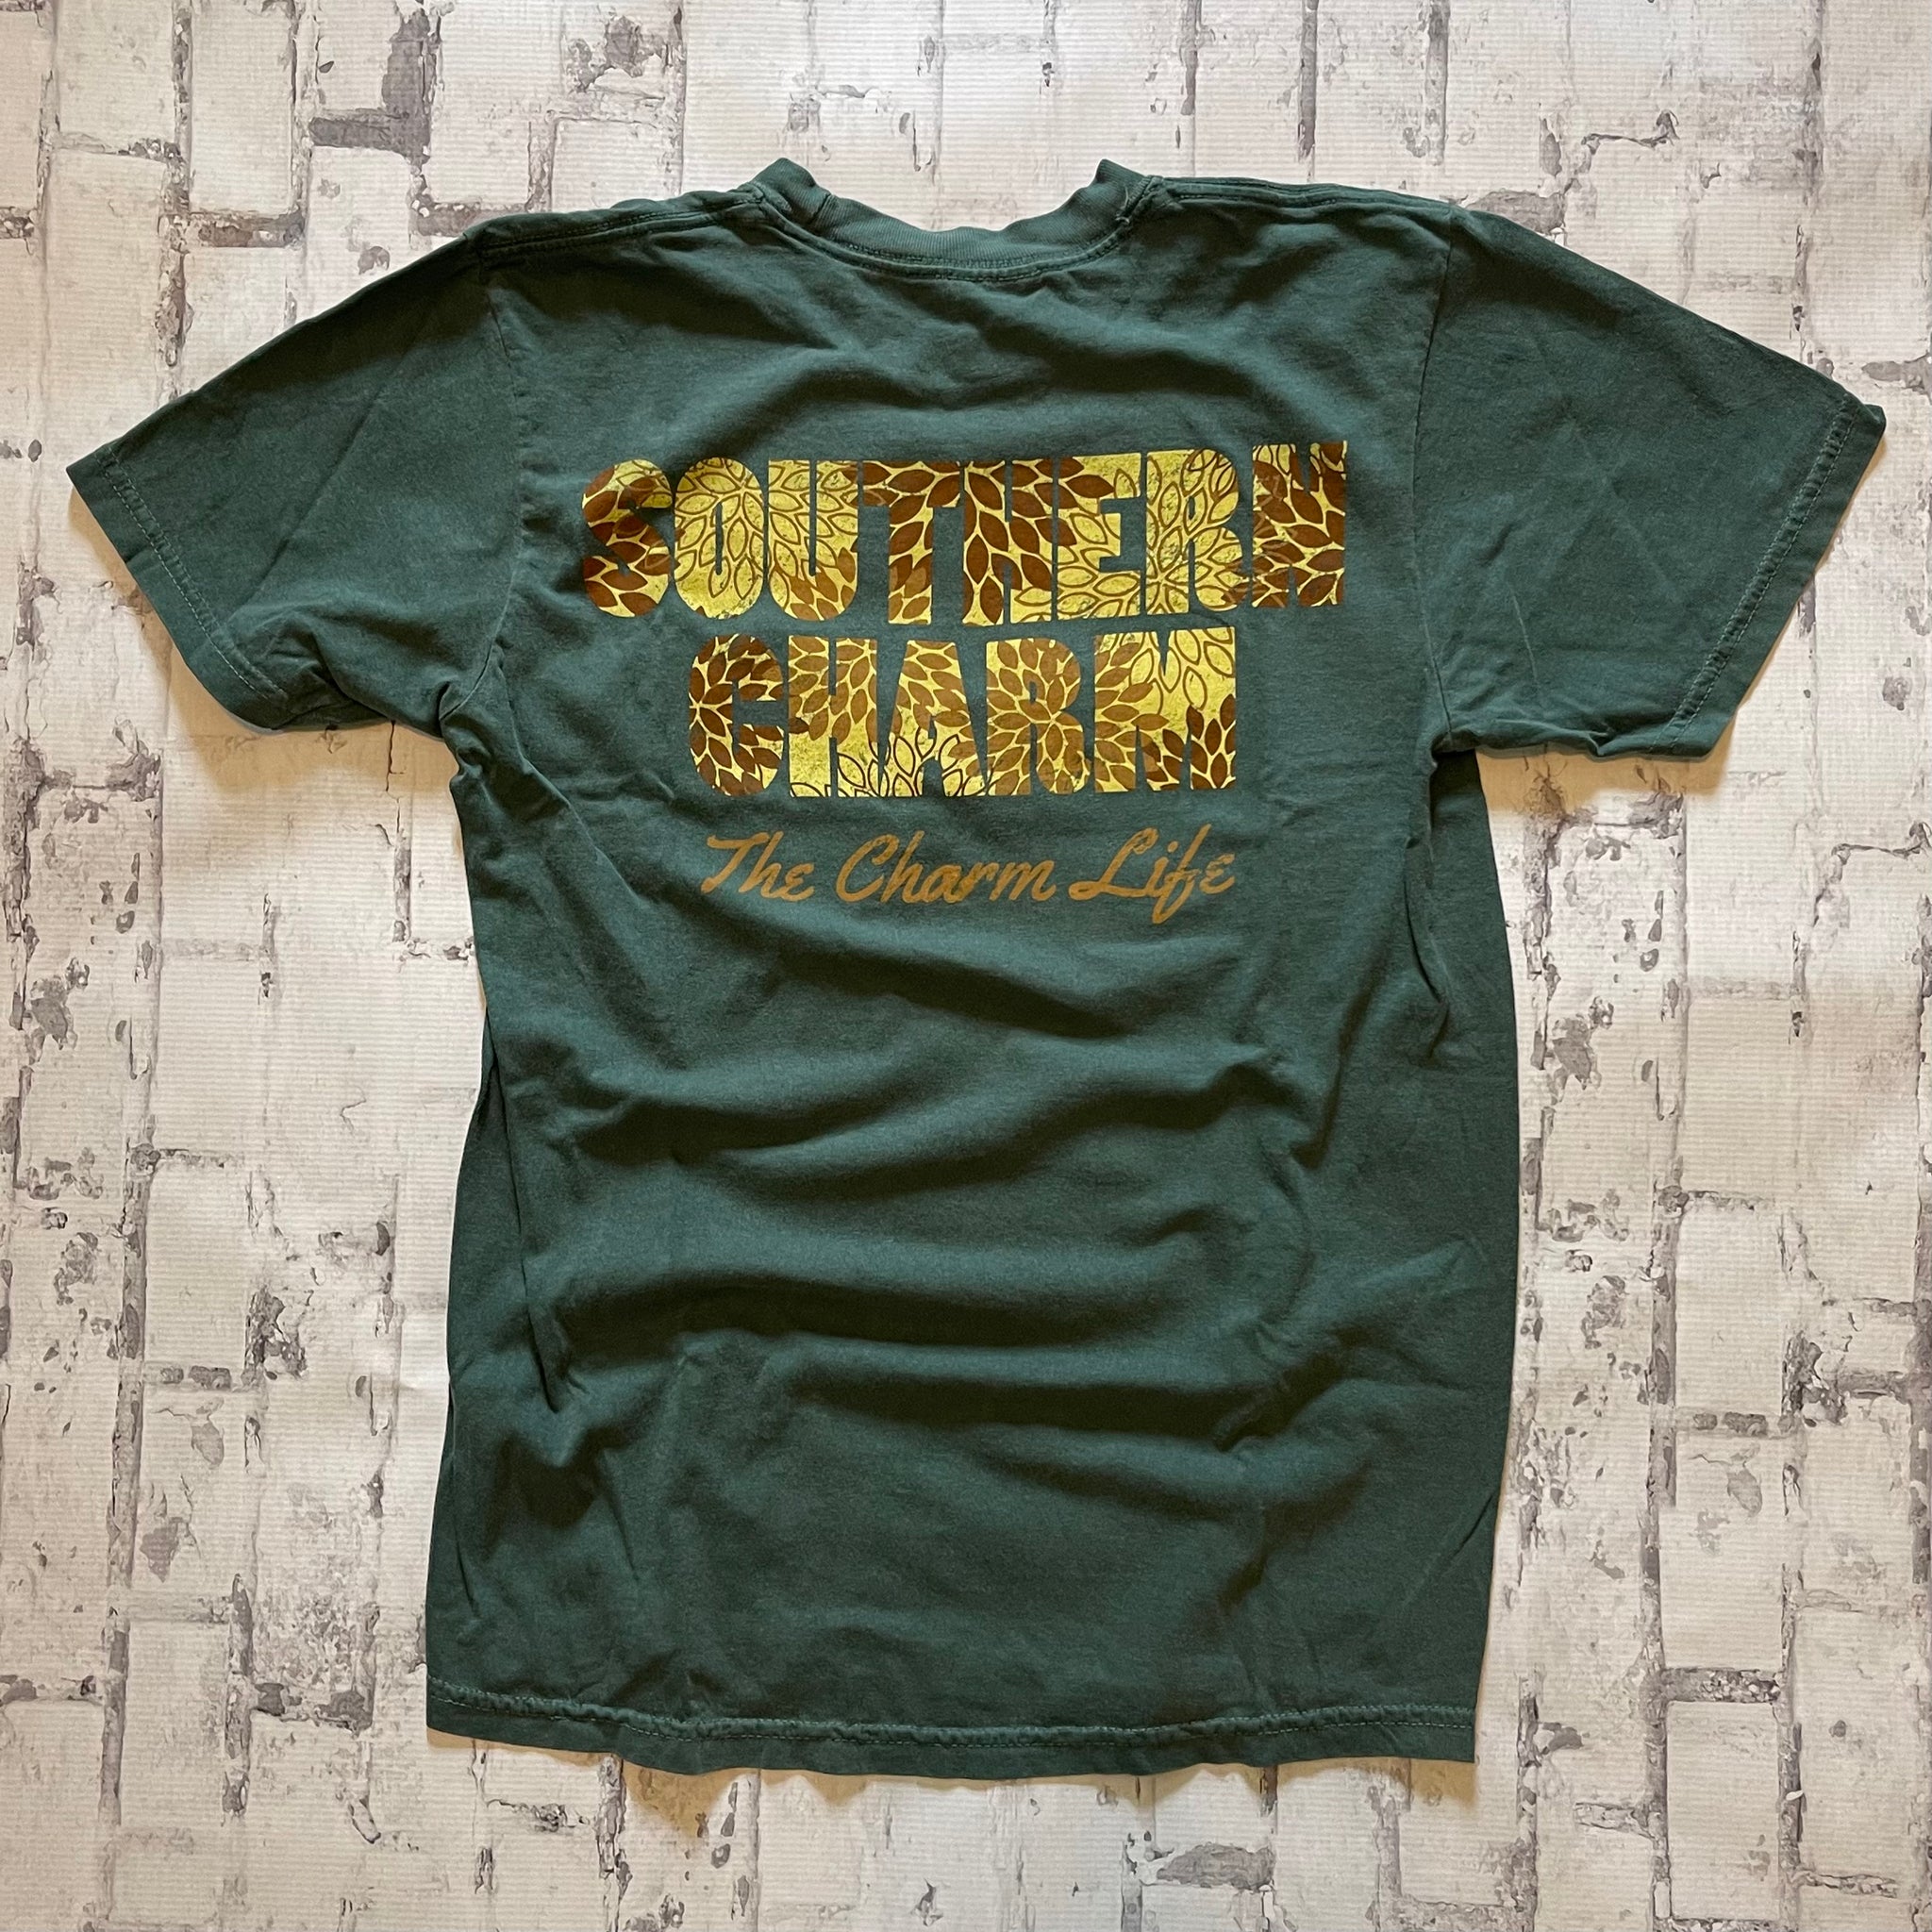 Southern Charm "Mums" Short Sleeve T-shirt - Blue Spruce - Southern Charm "Shop The Charm"